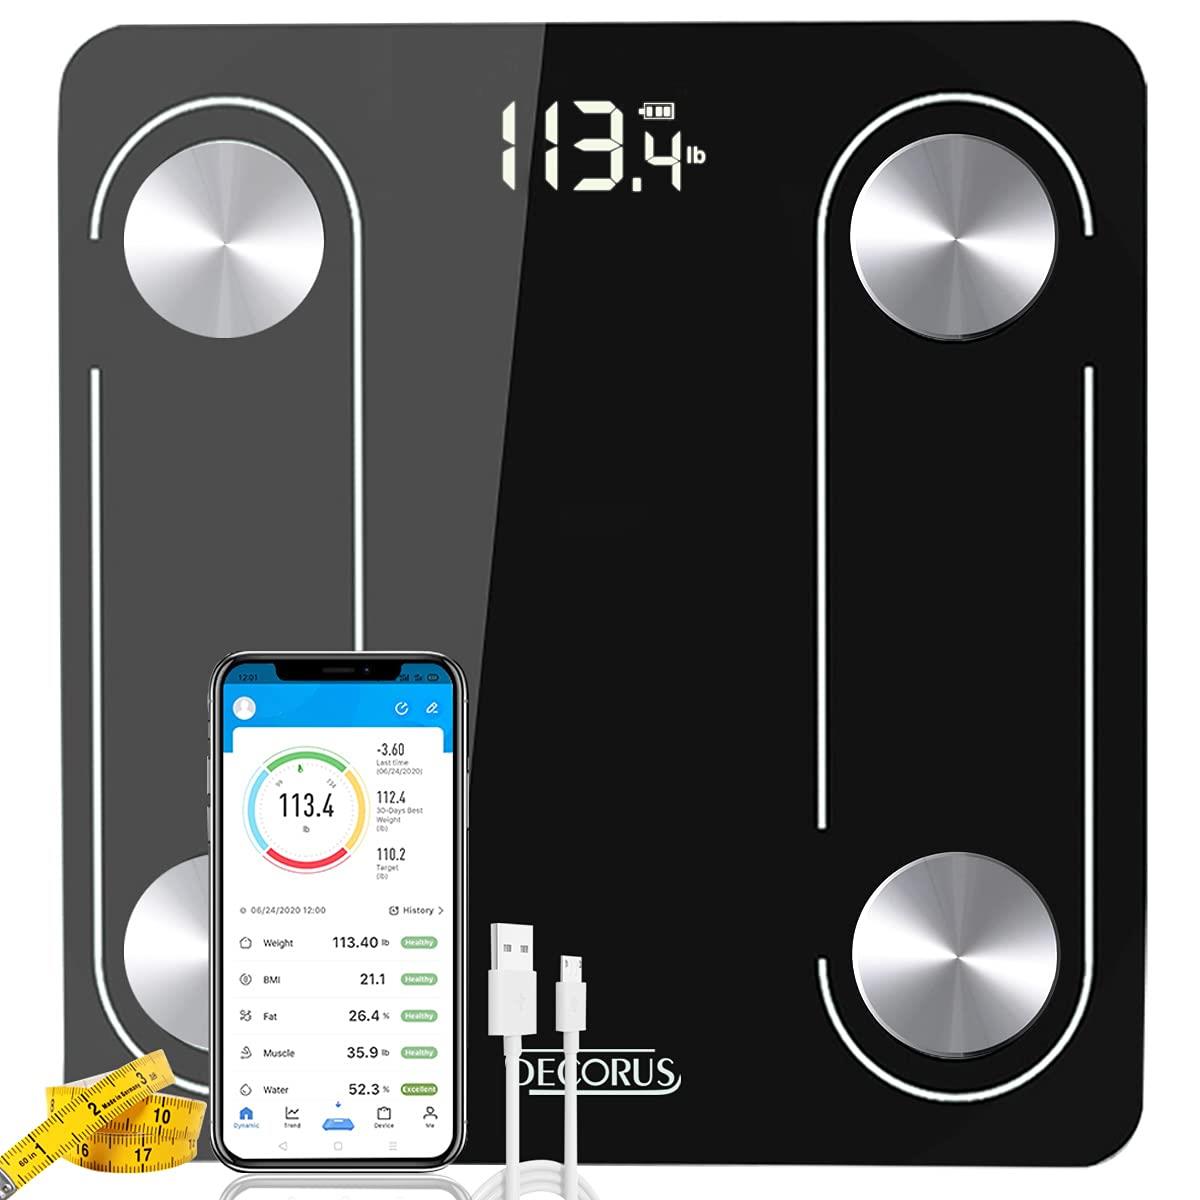 Arboleaf Digital Scale - Smart Scale Wireless Bathroom Weight